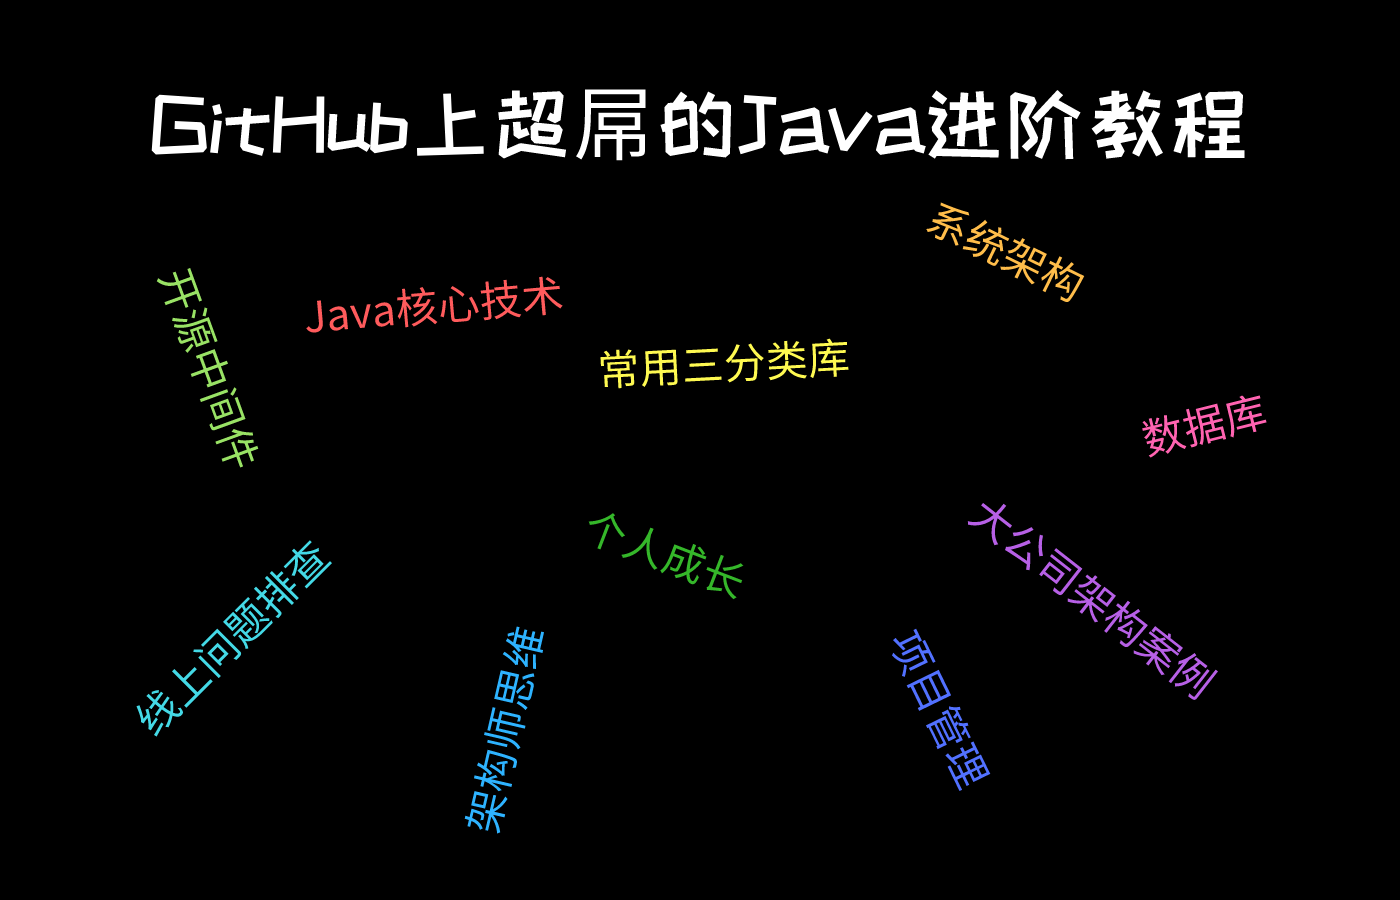 GitHub上超屌的Java进阶教程，Java核心技术及大公司架构案例汇总